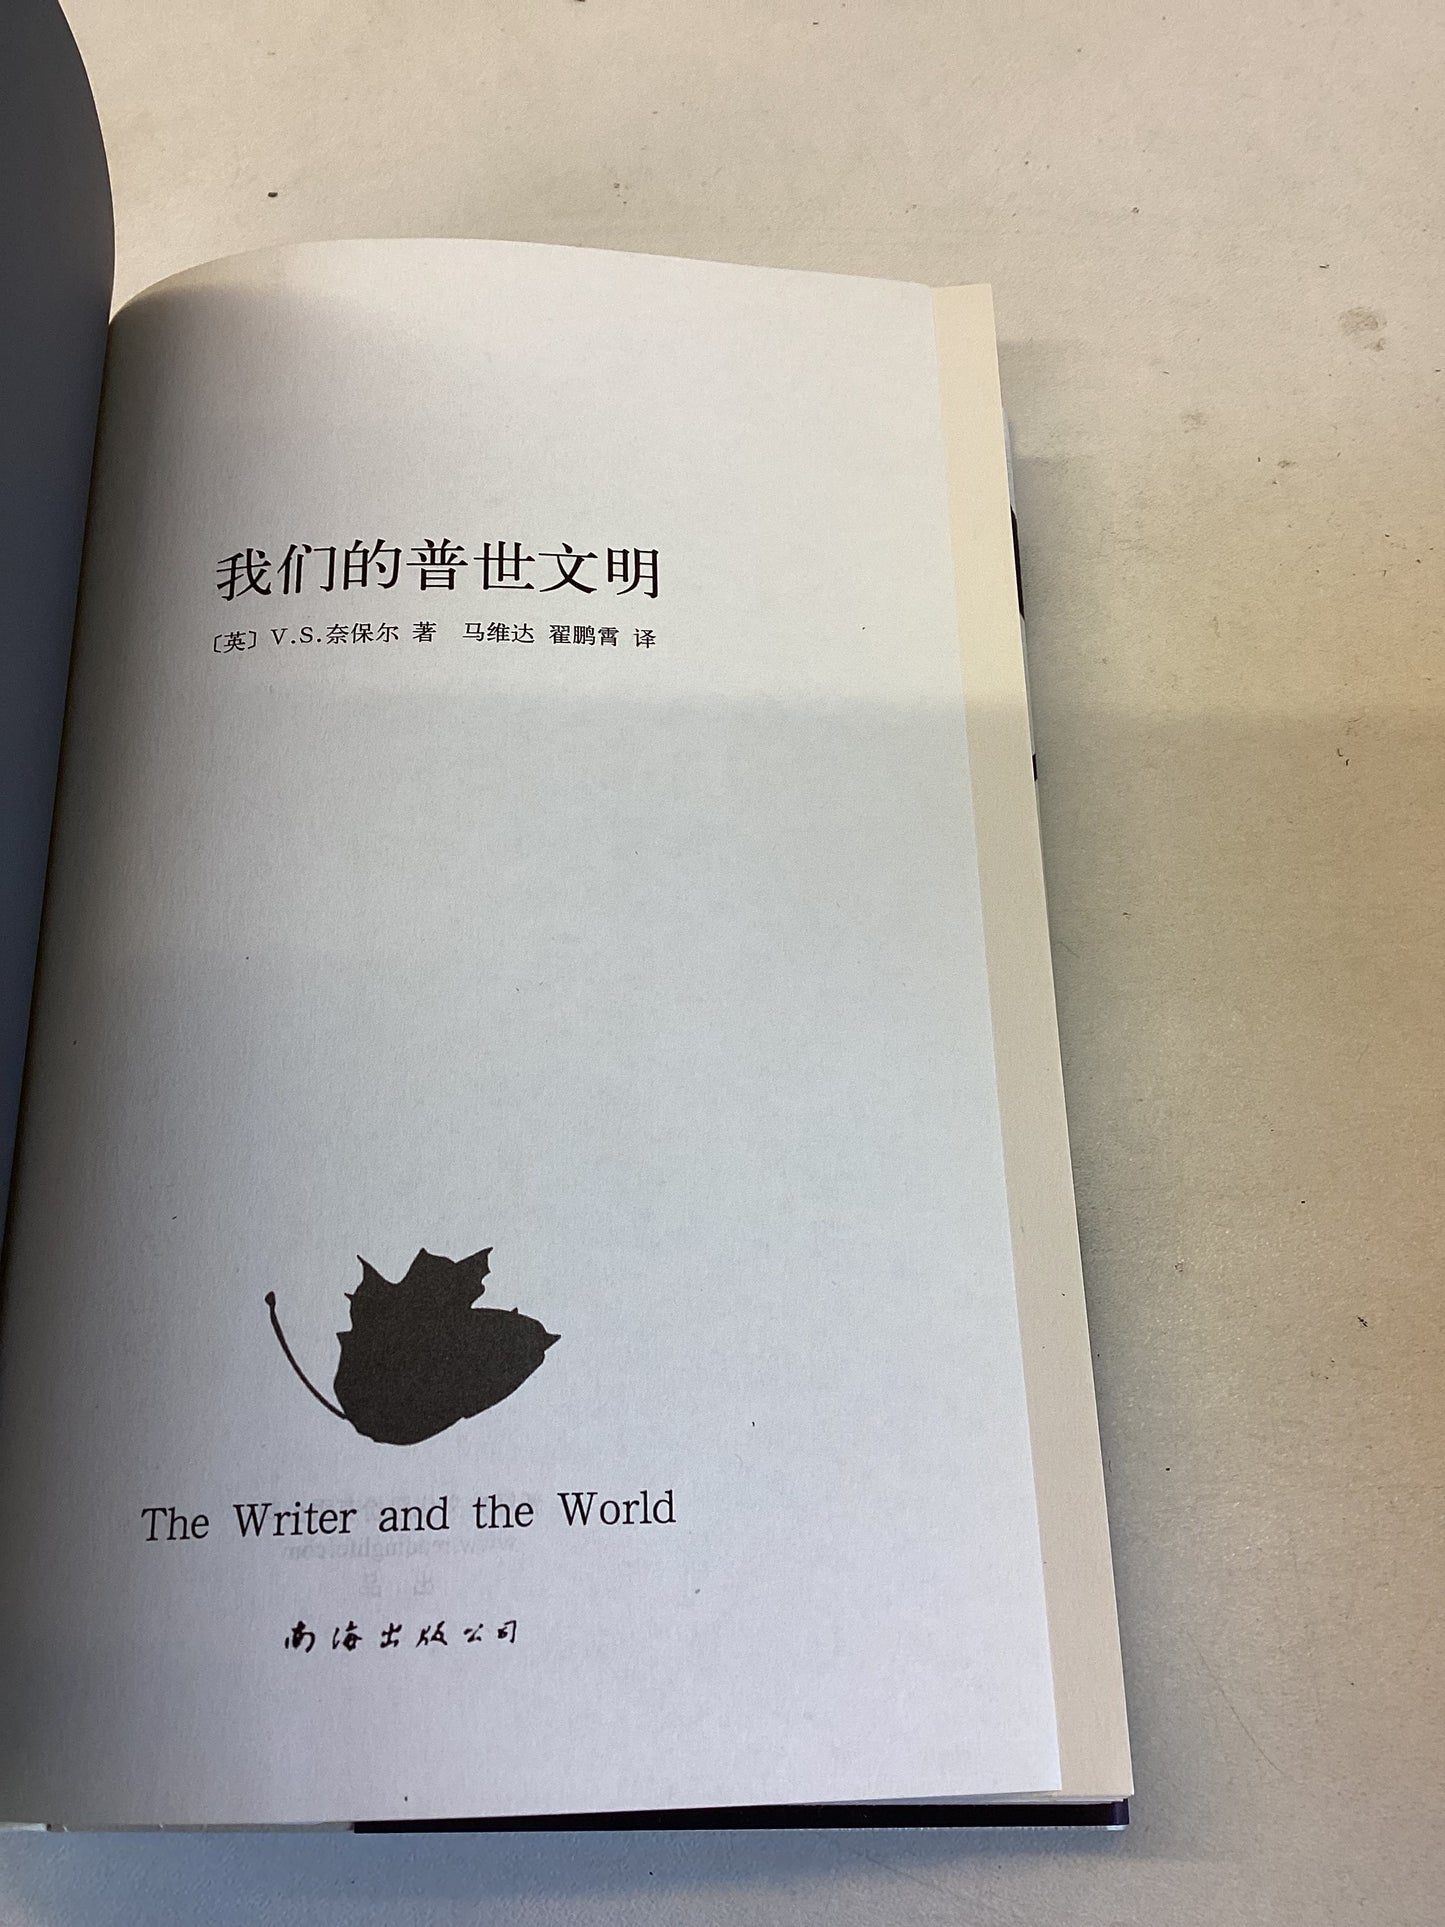 Our Universal Civilisation Chinese Edition V S Nai Bao